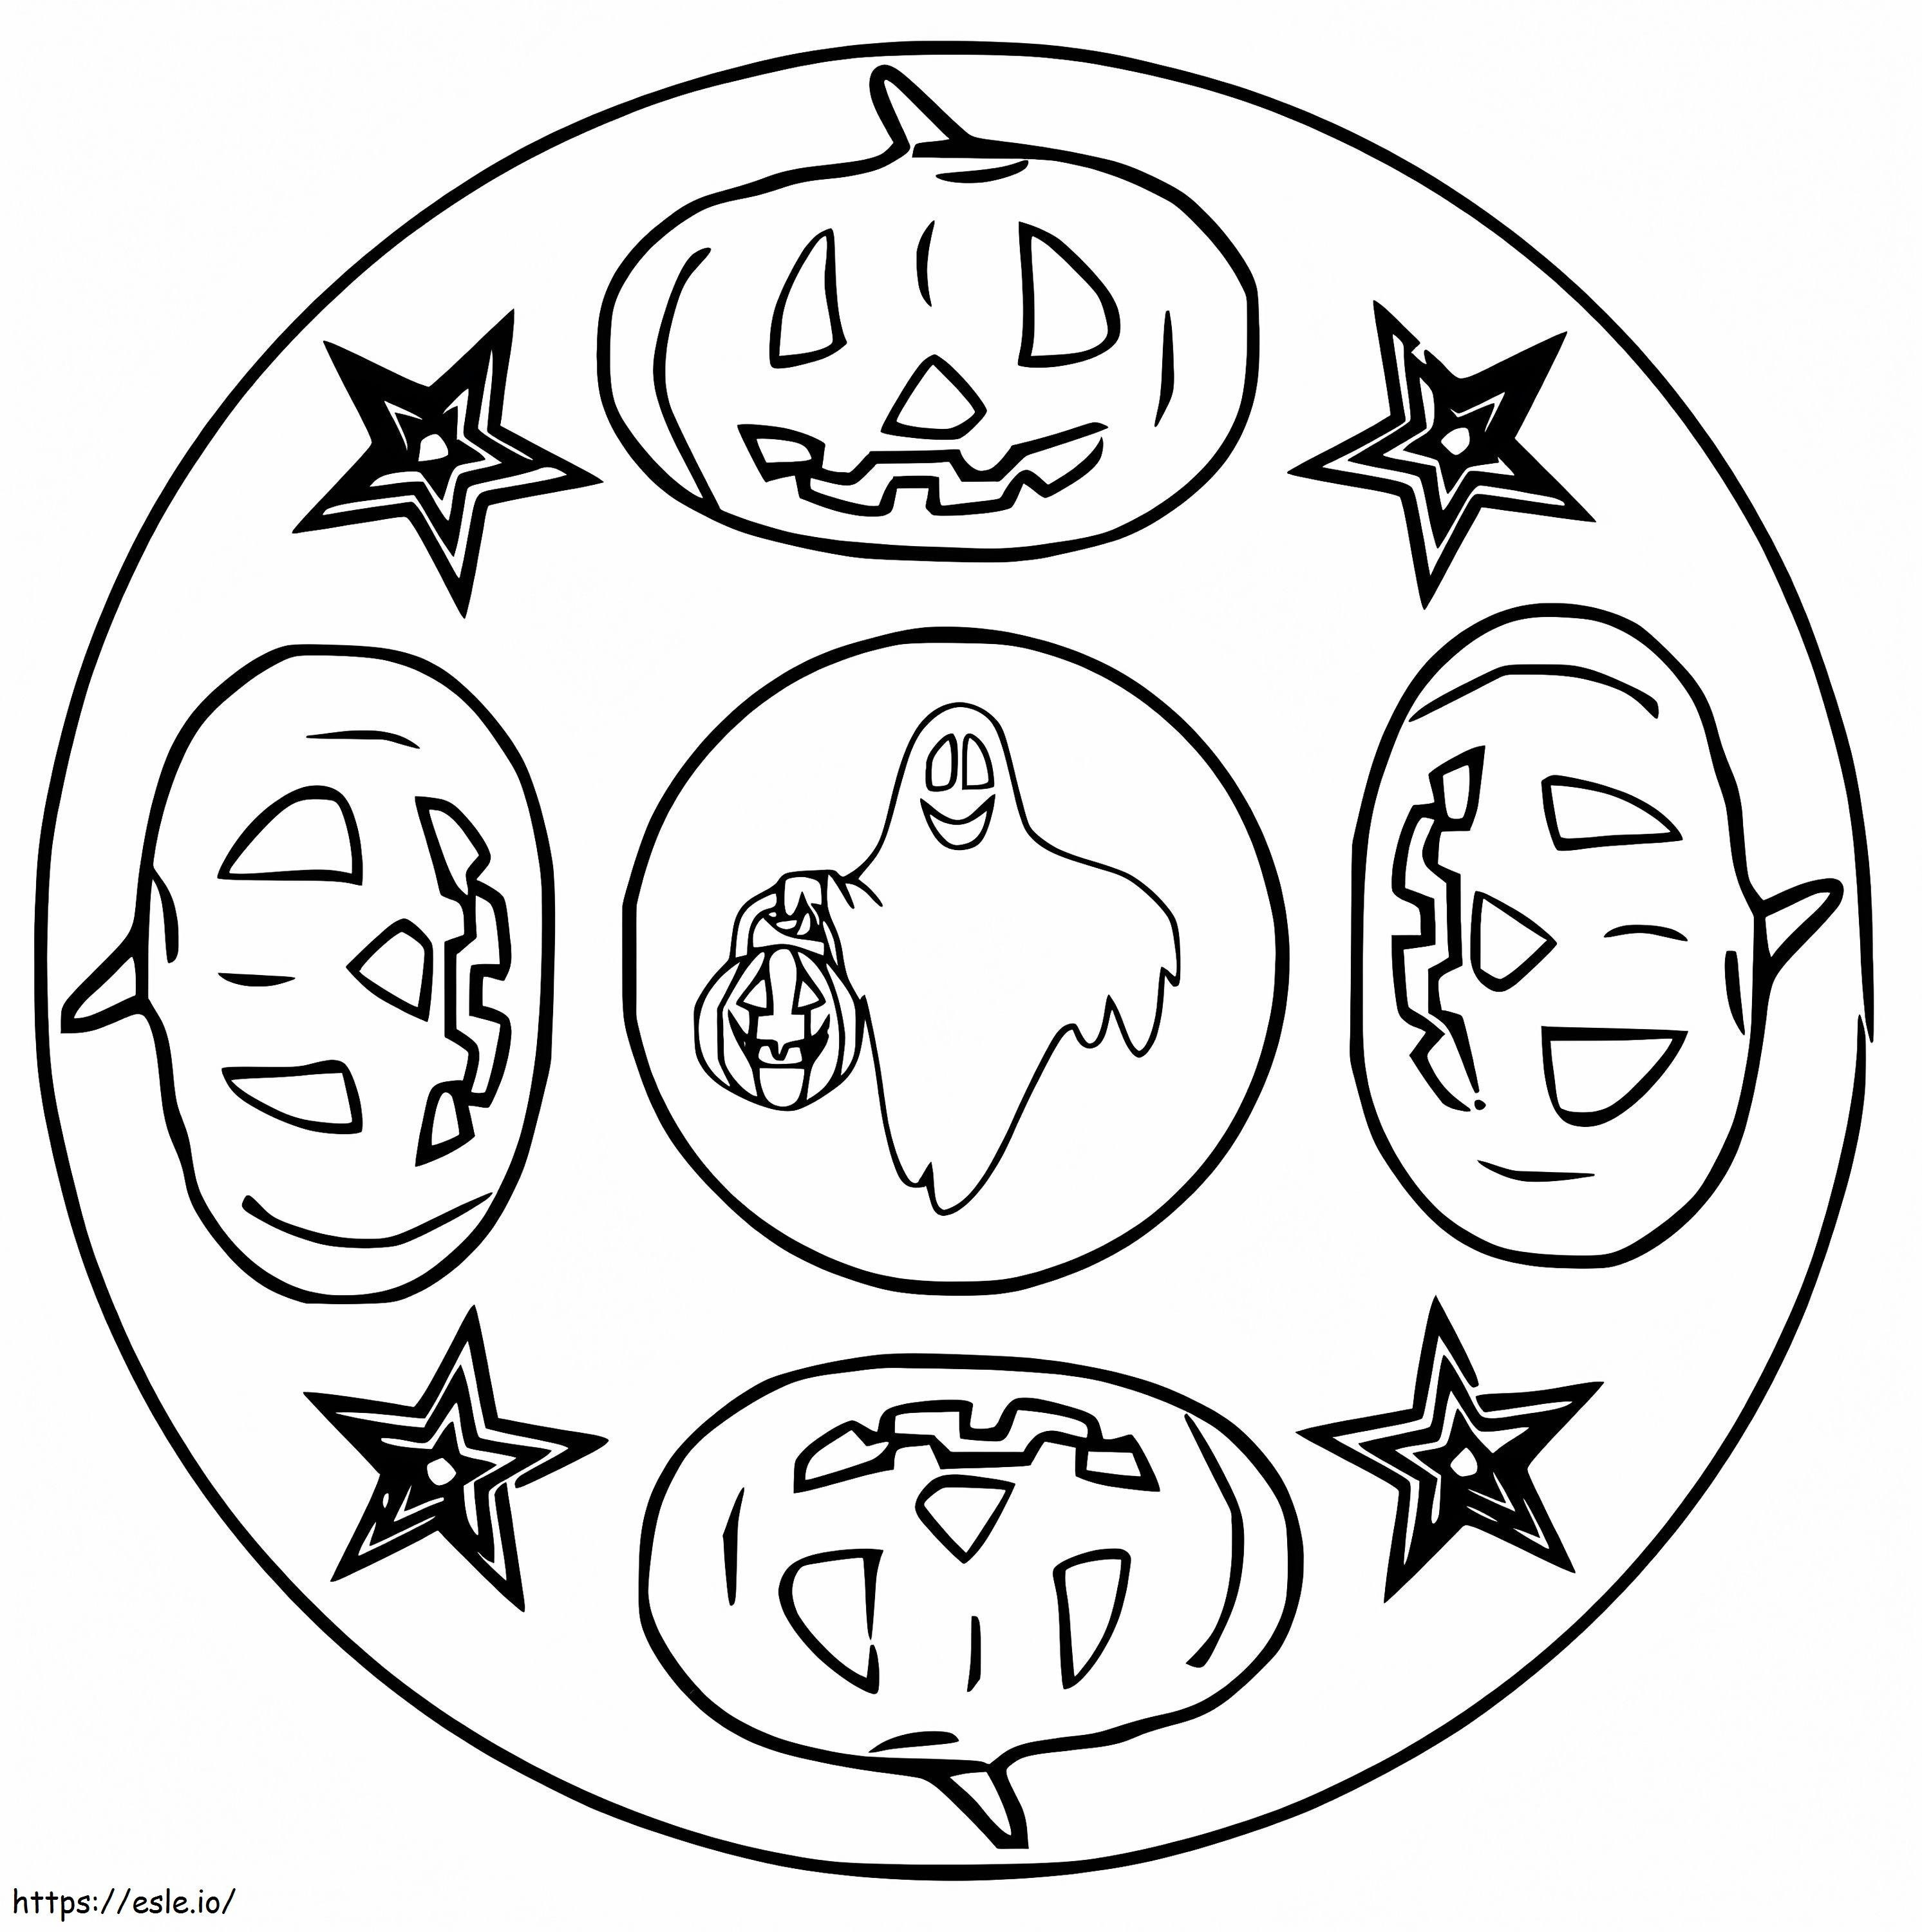 Mandala de Halloween 3 para colorir